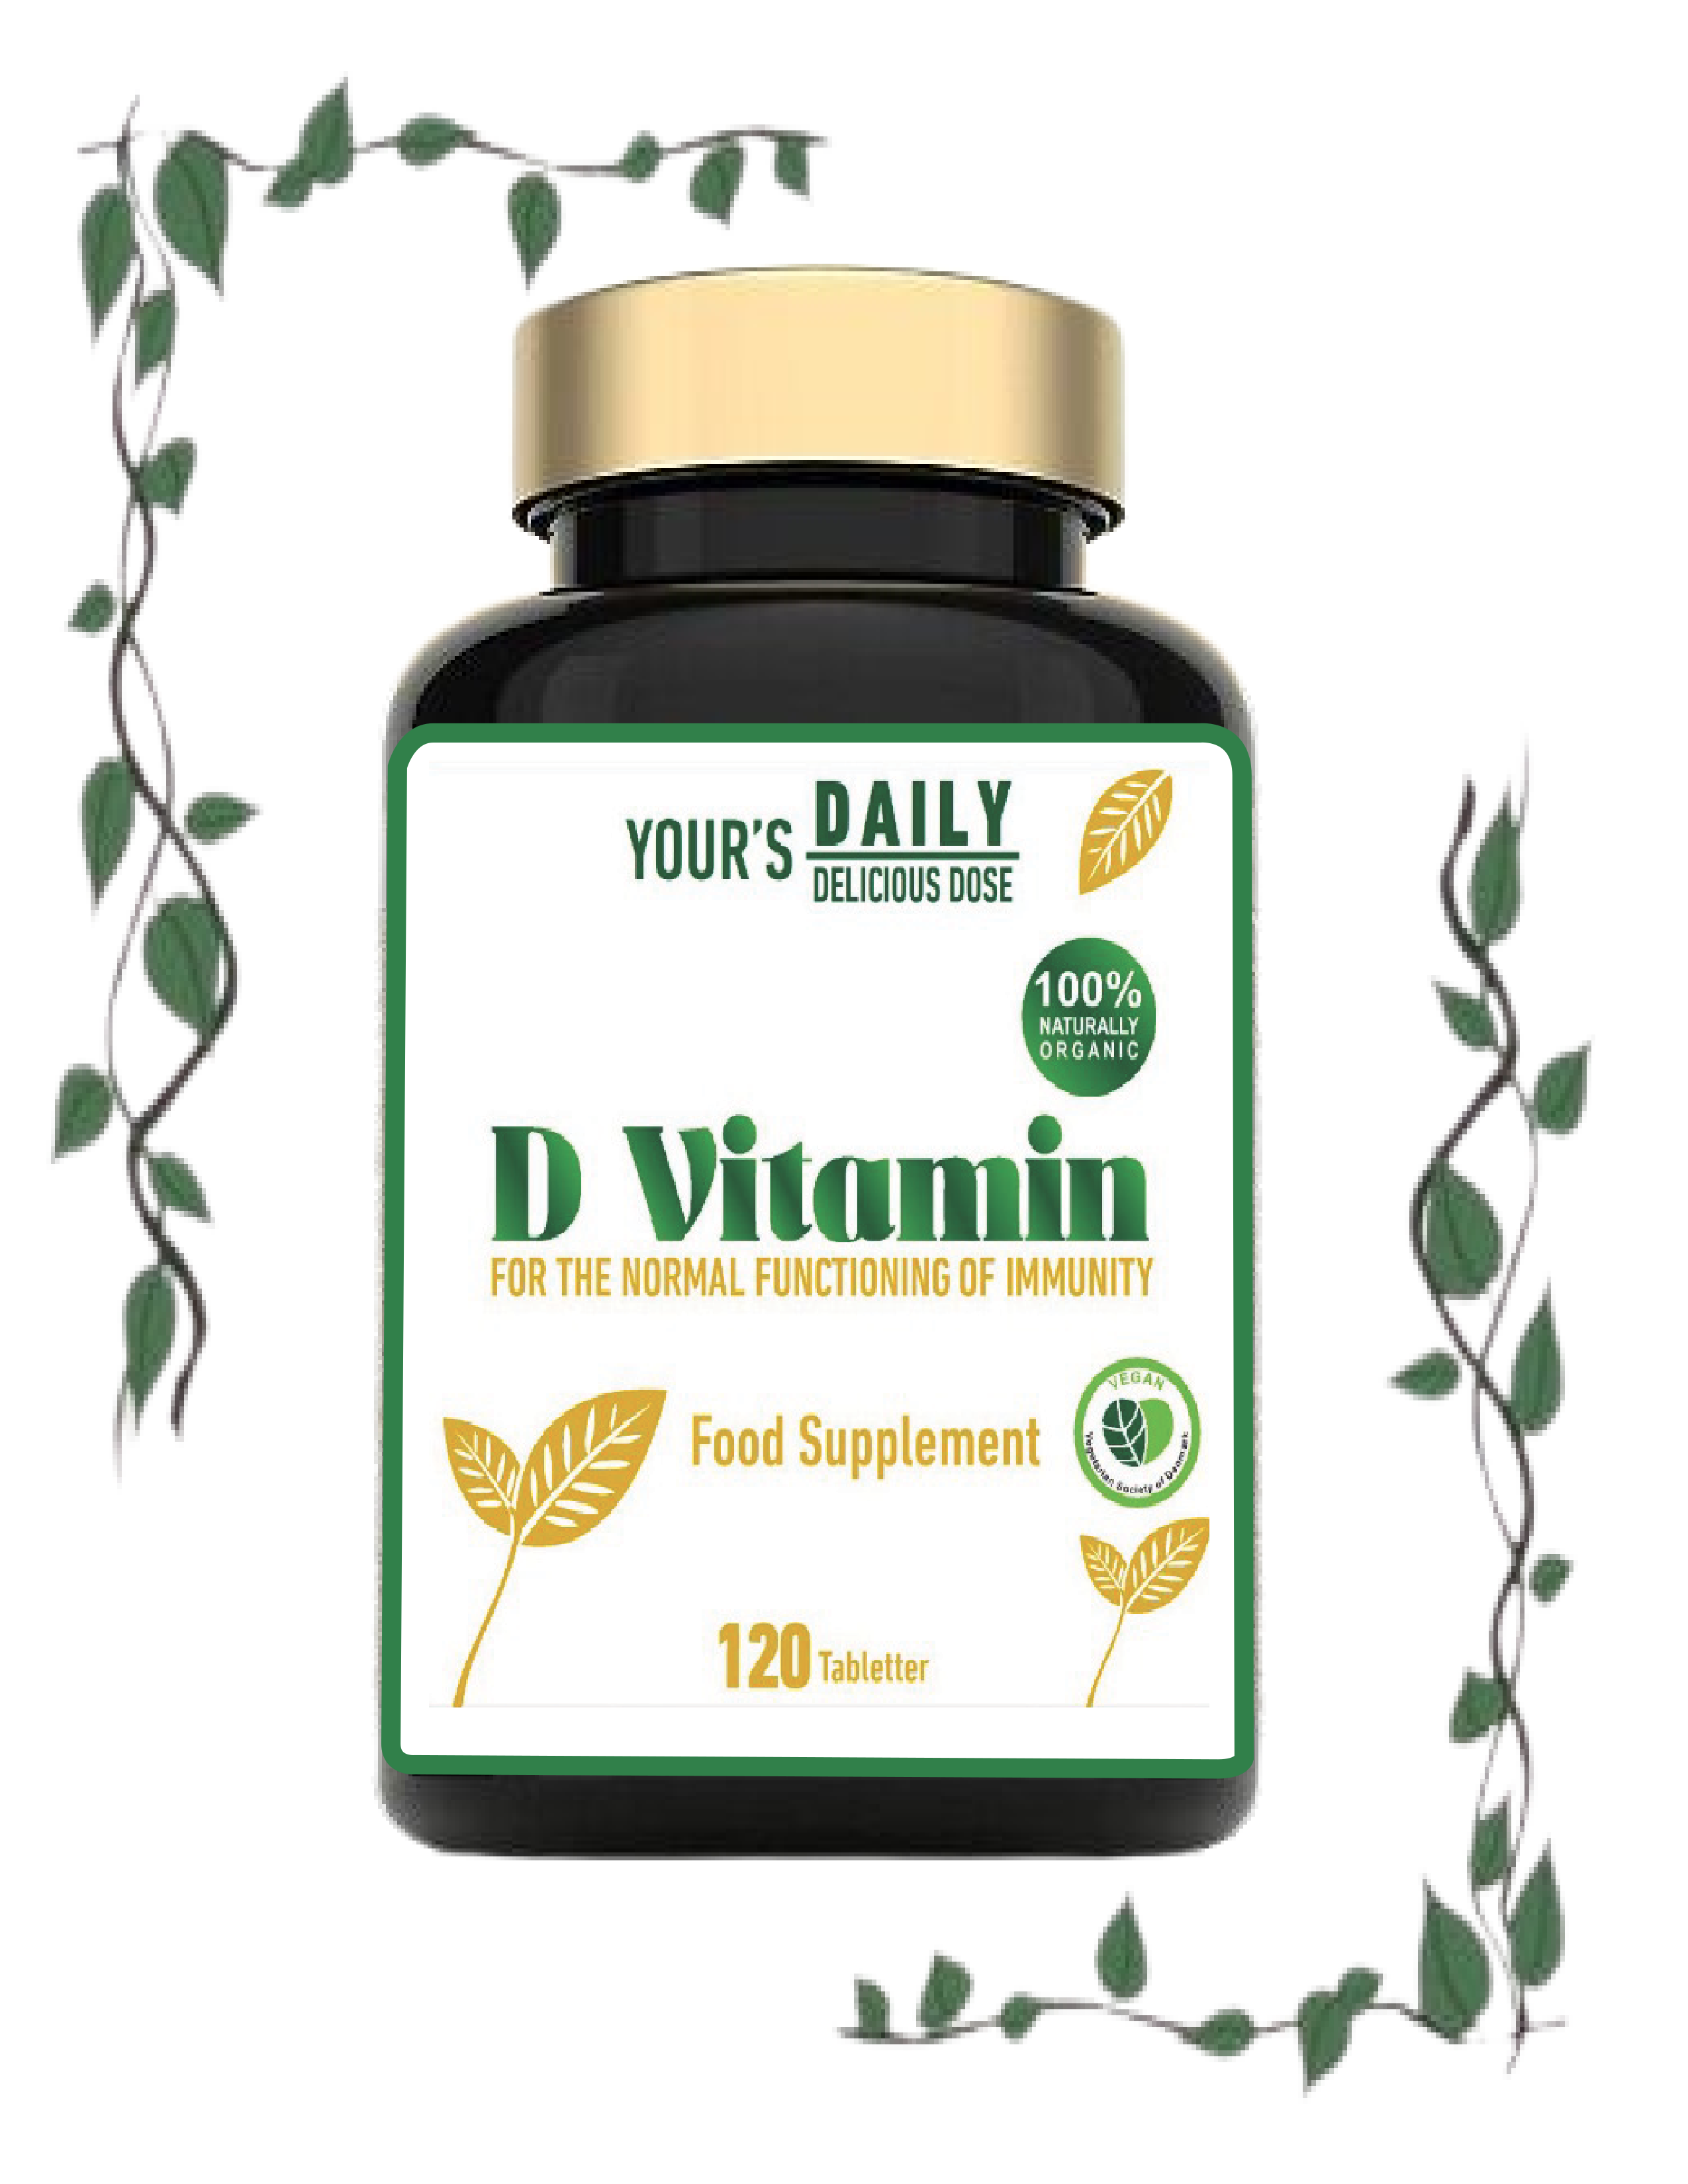 Vitamin D Supplement Image